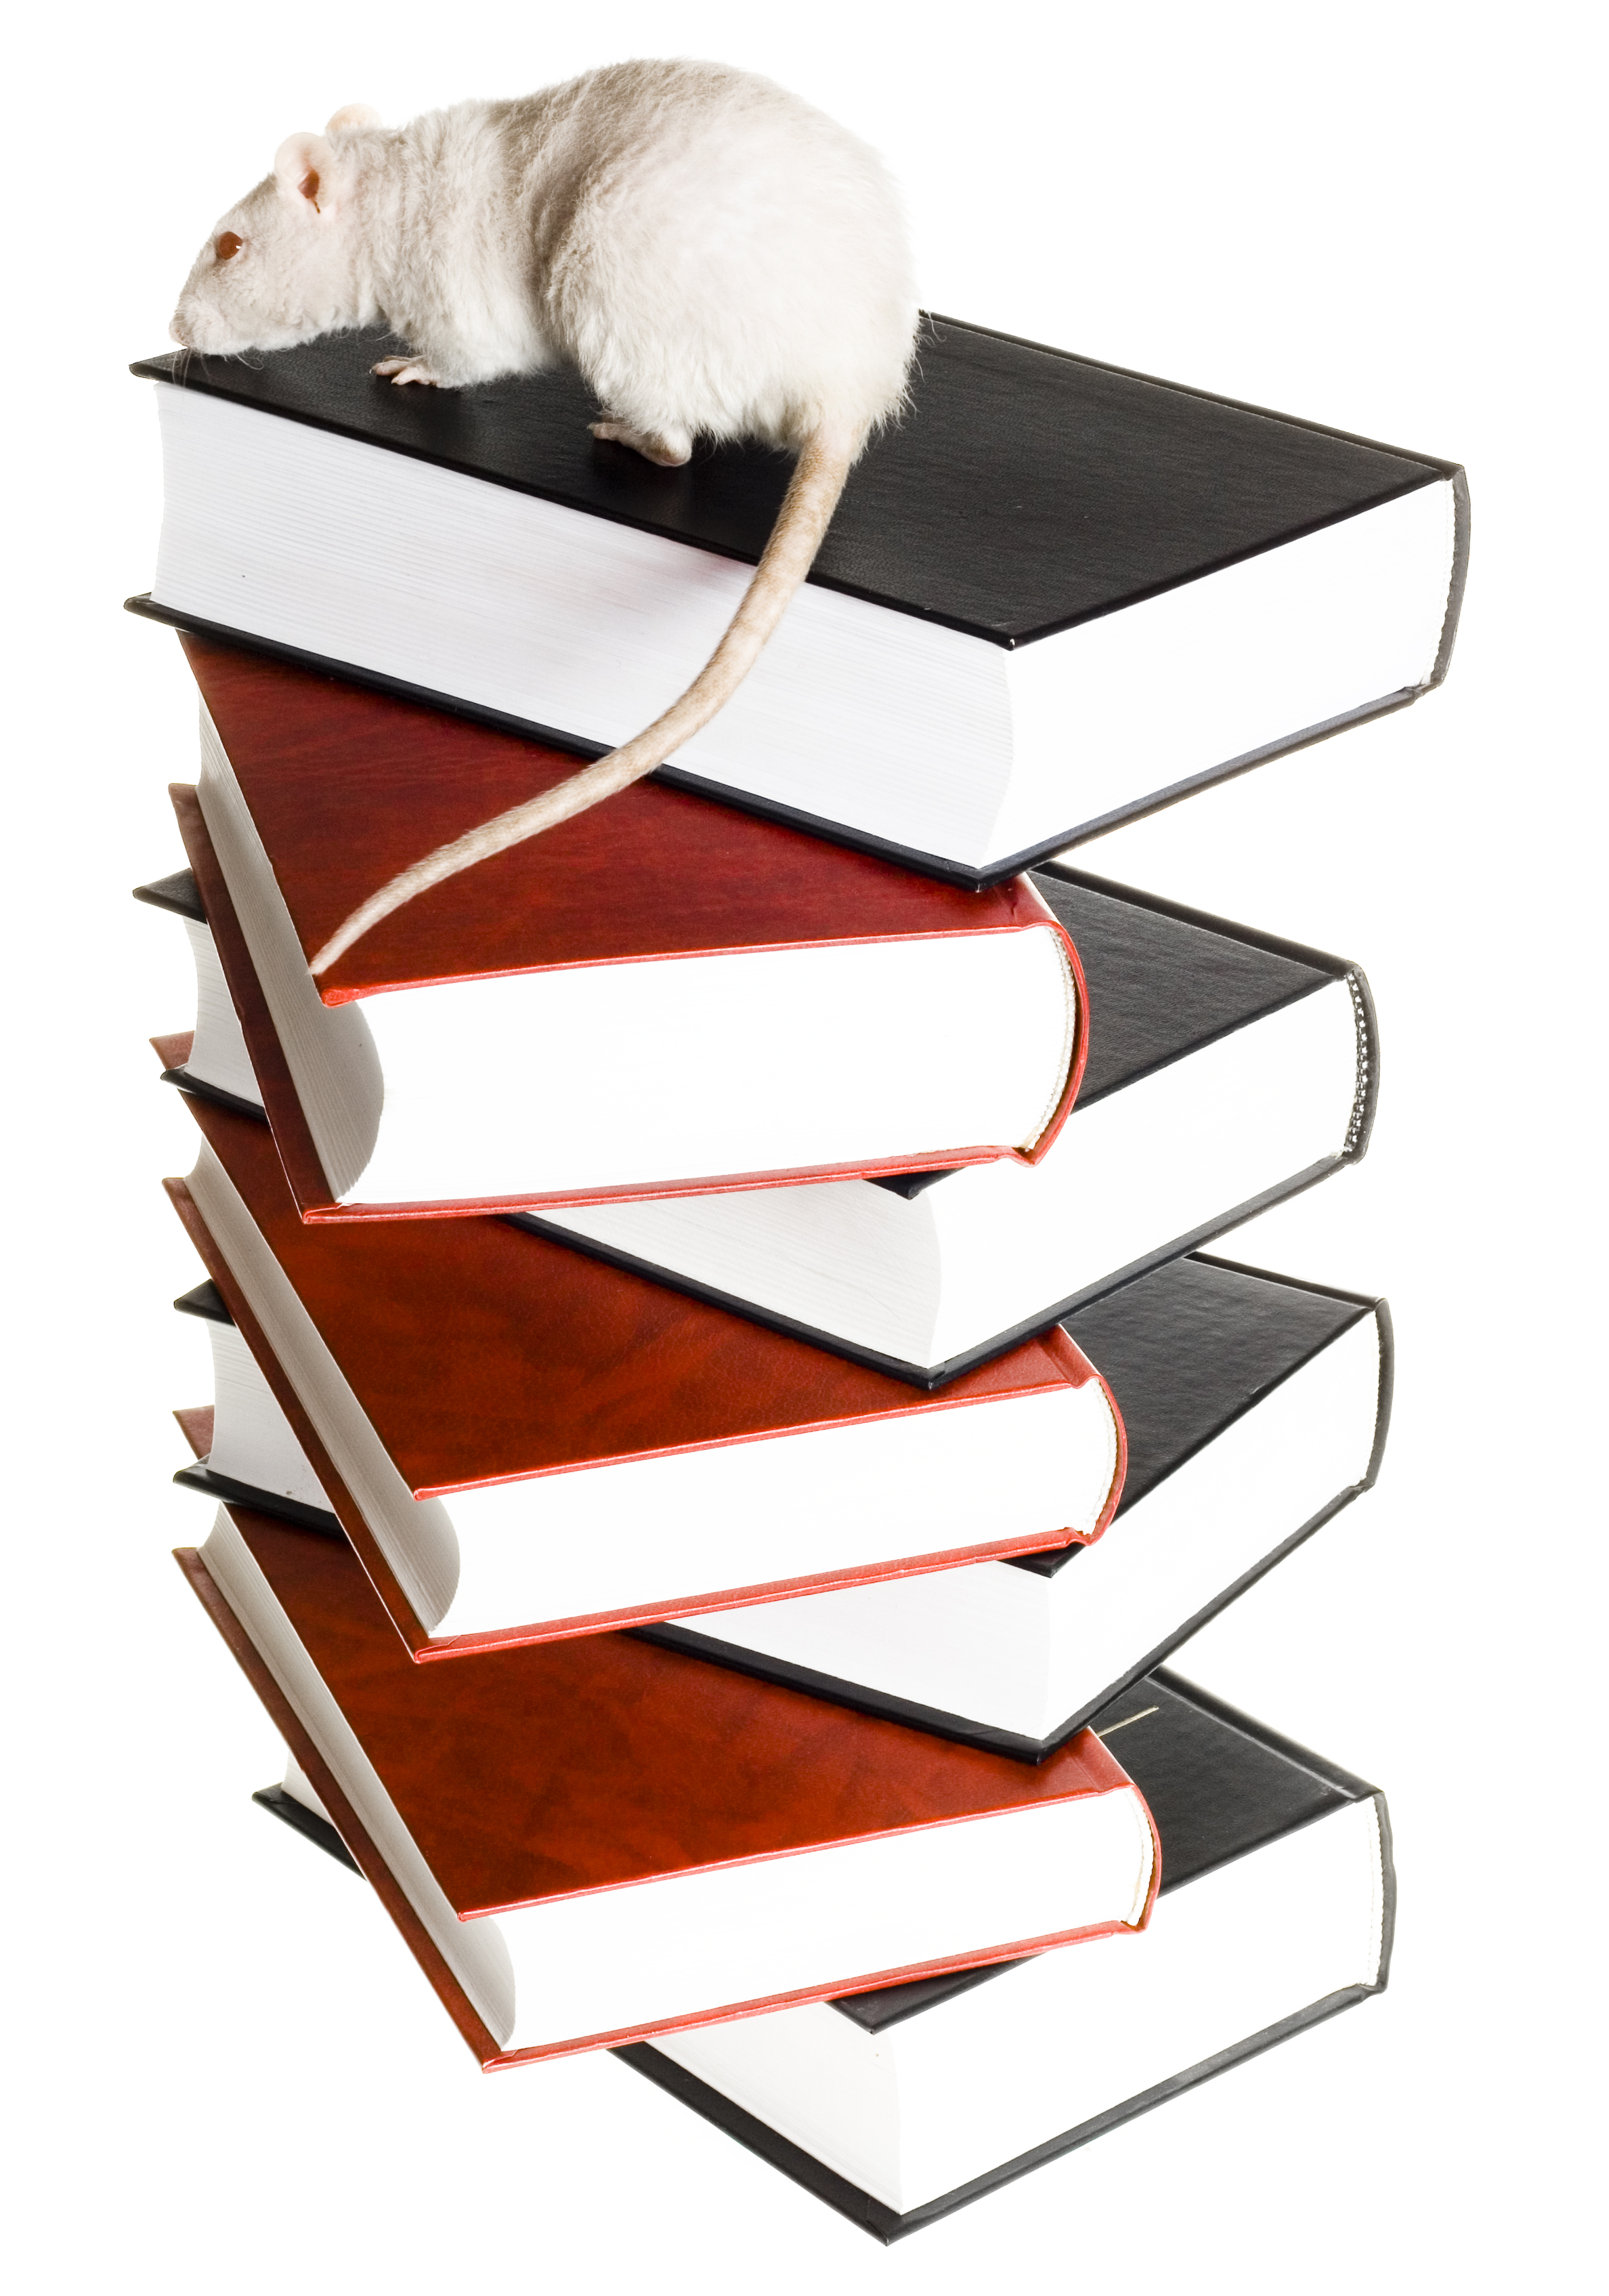 Rat & books photo